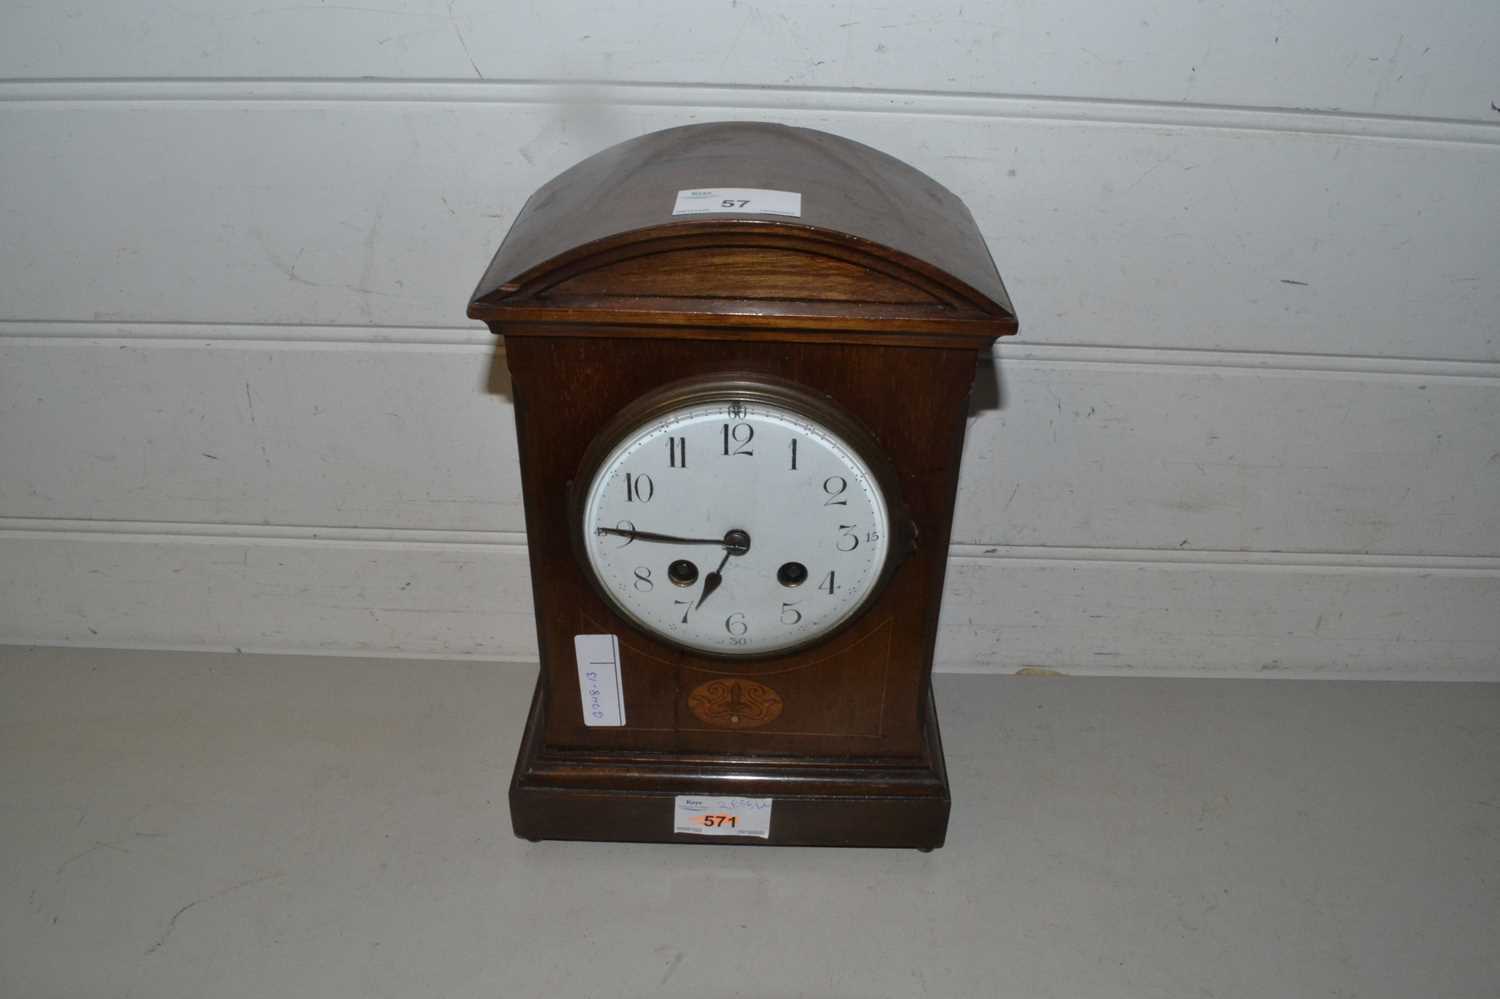 Edwardian mahogany cased mantel clock